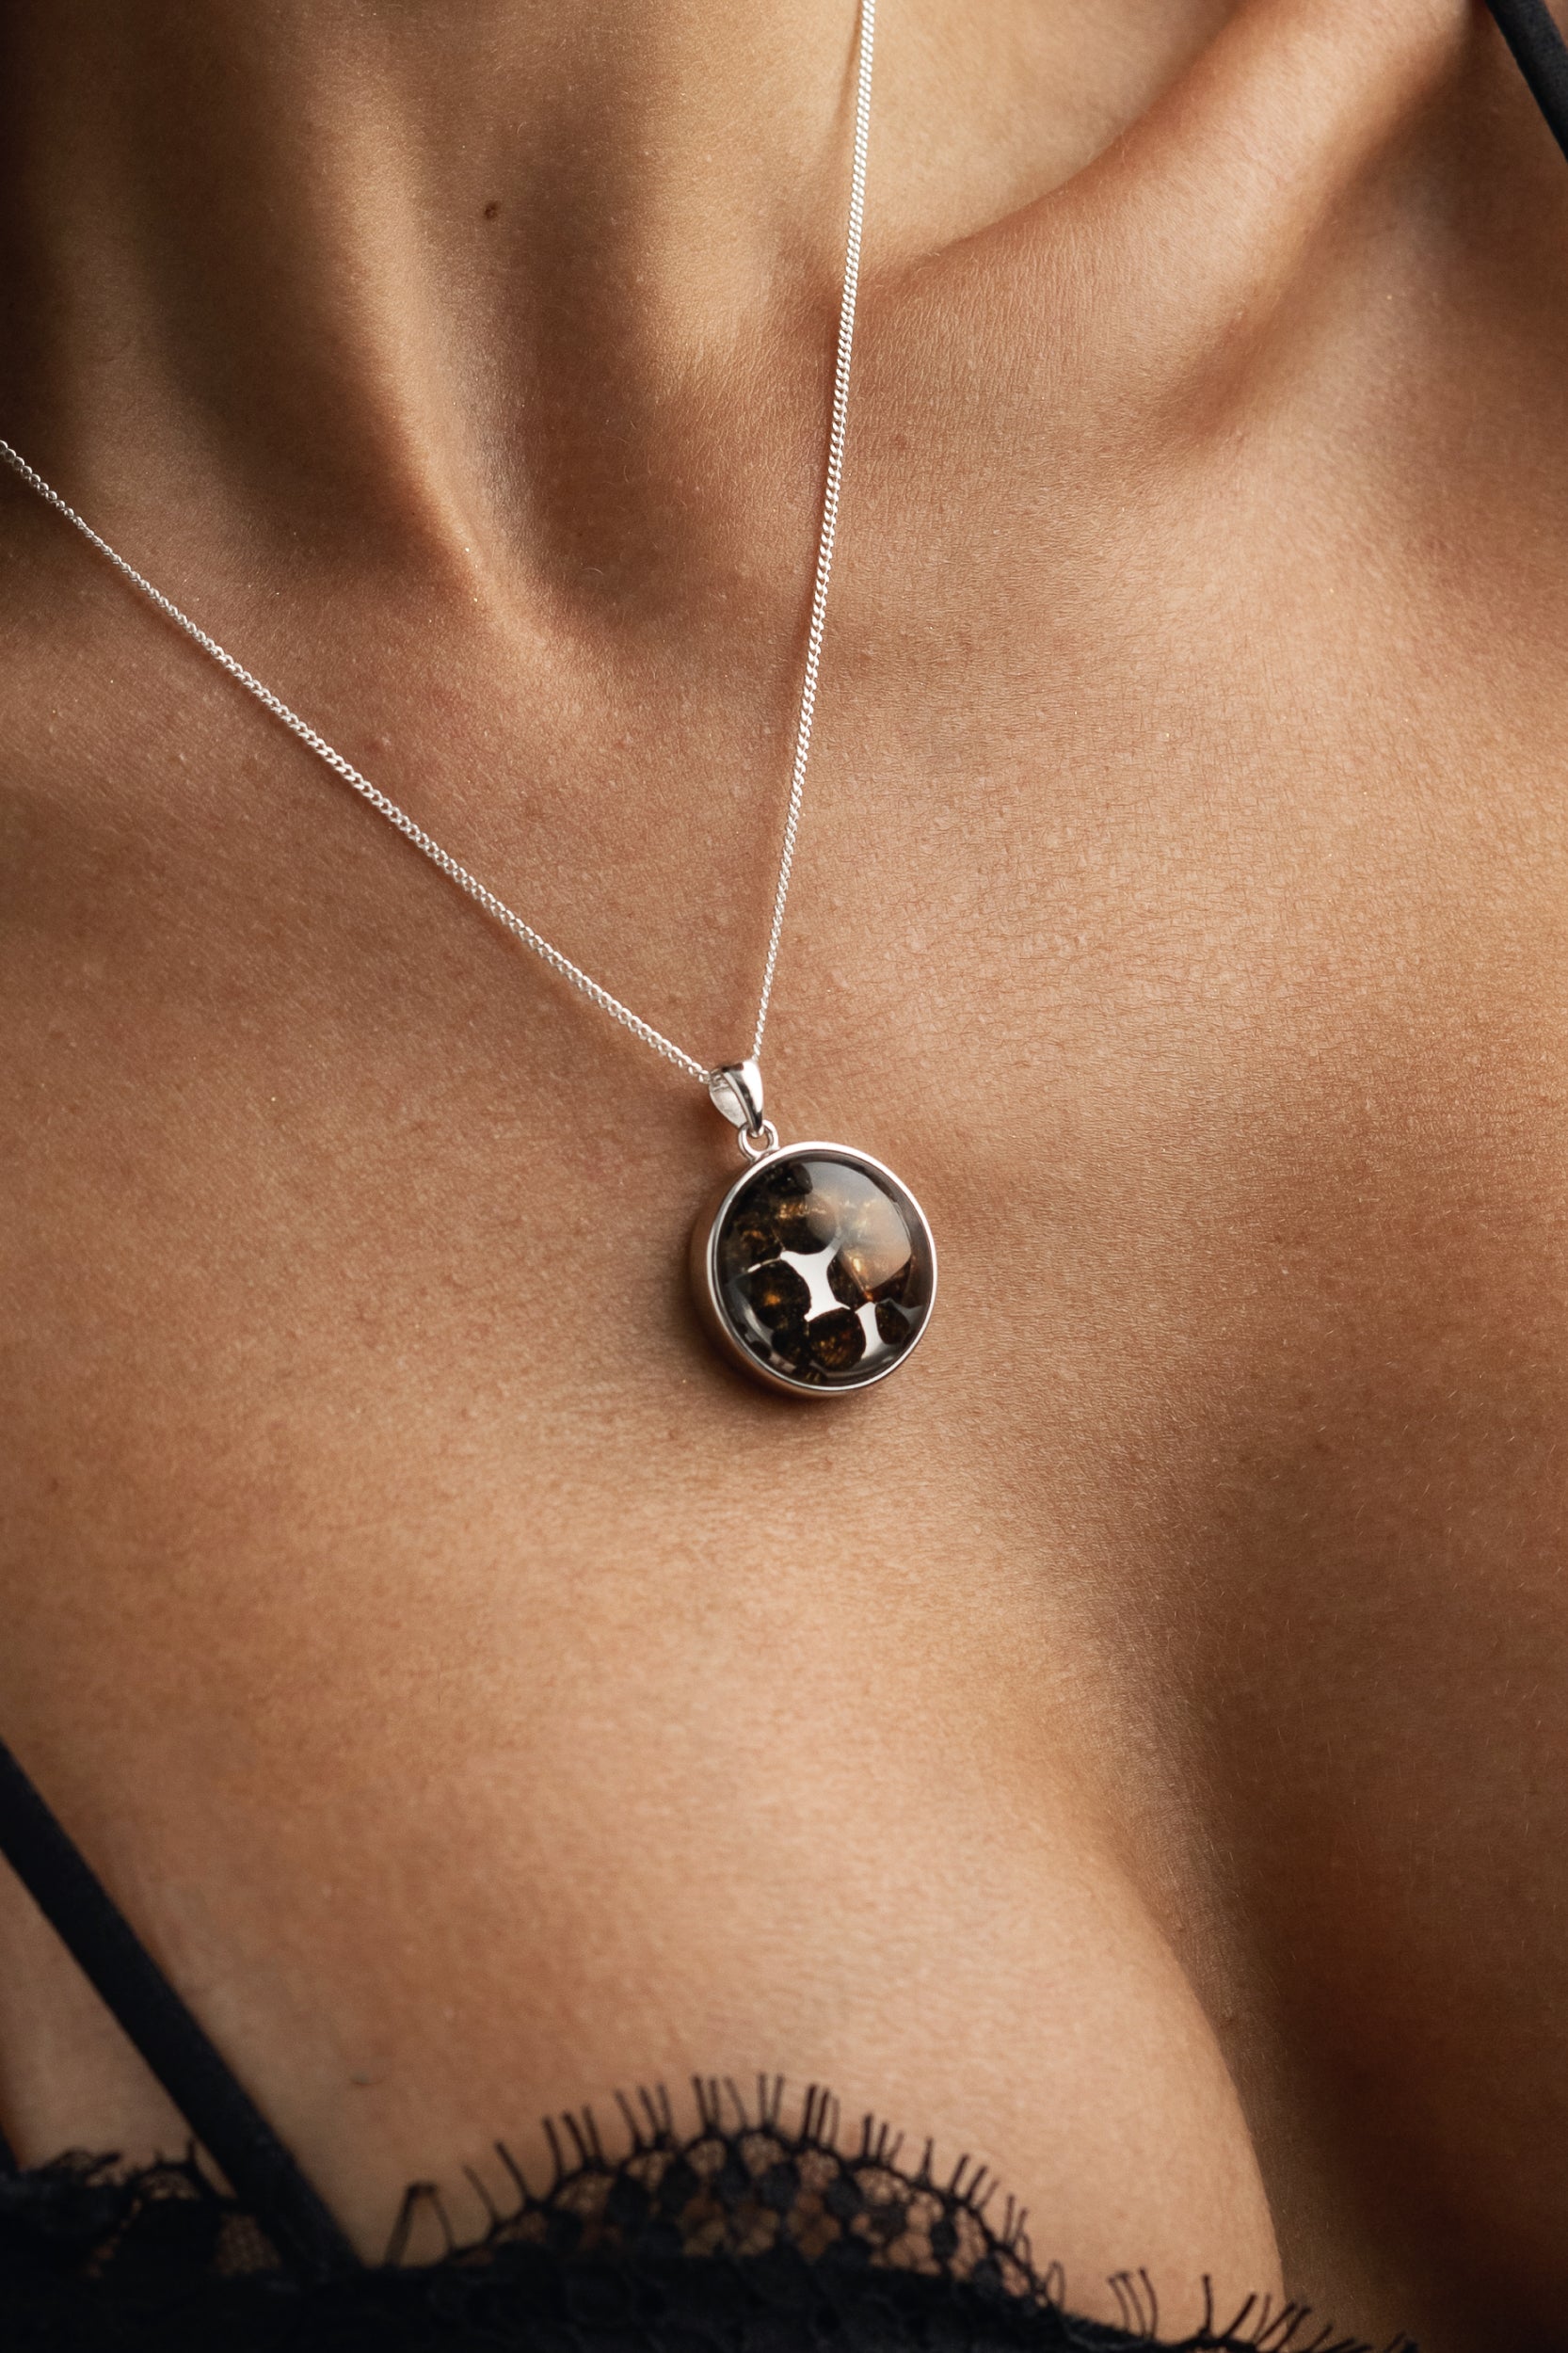 Authentic meteorite pendant made with Sericho meteorite and silver 925. Genuine pallasite pendant